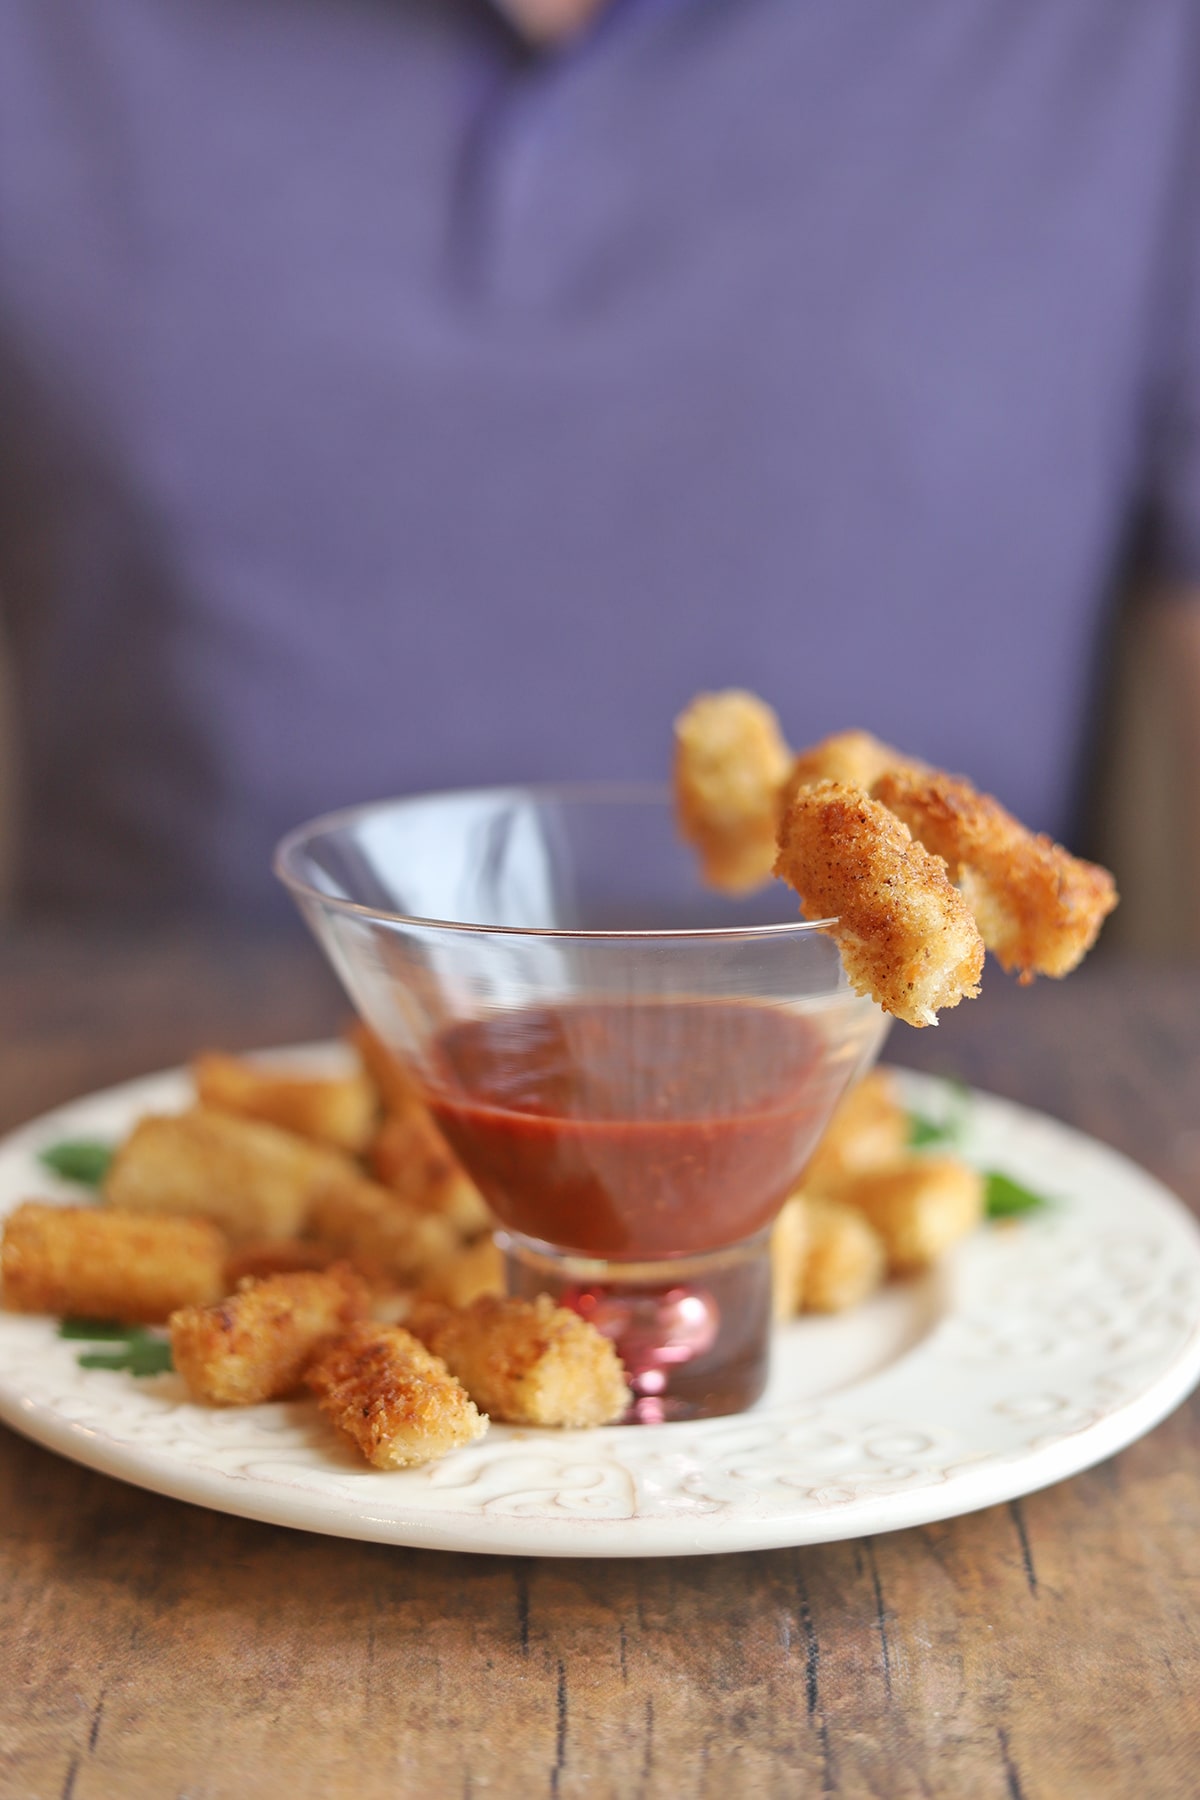 Vegan shrimp with cocktail sauce on plate.